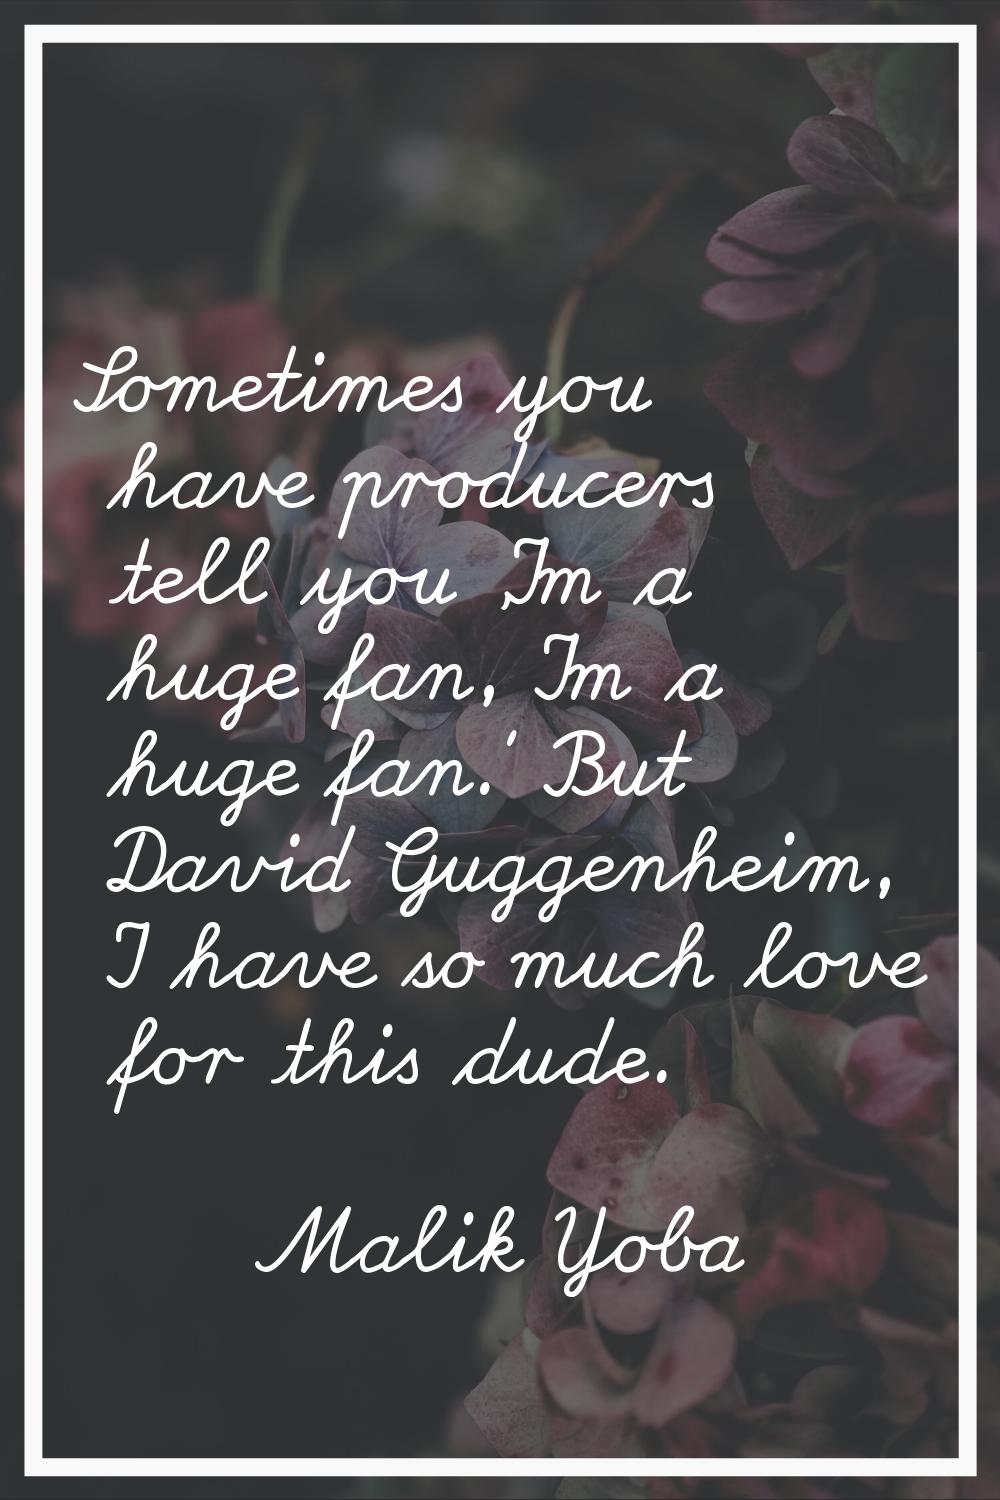 Sometimes you have producers tell you 'I'm a huge fan, I'm a huge fan.' But David Guggenheim, I hav